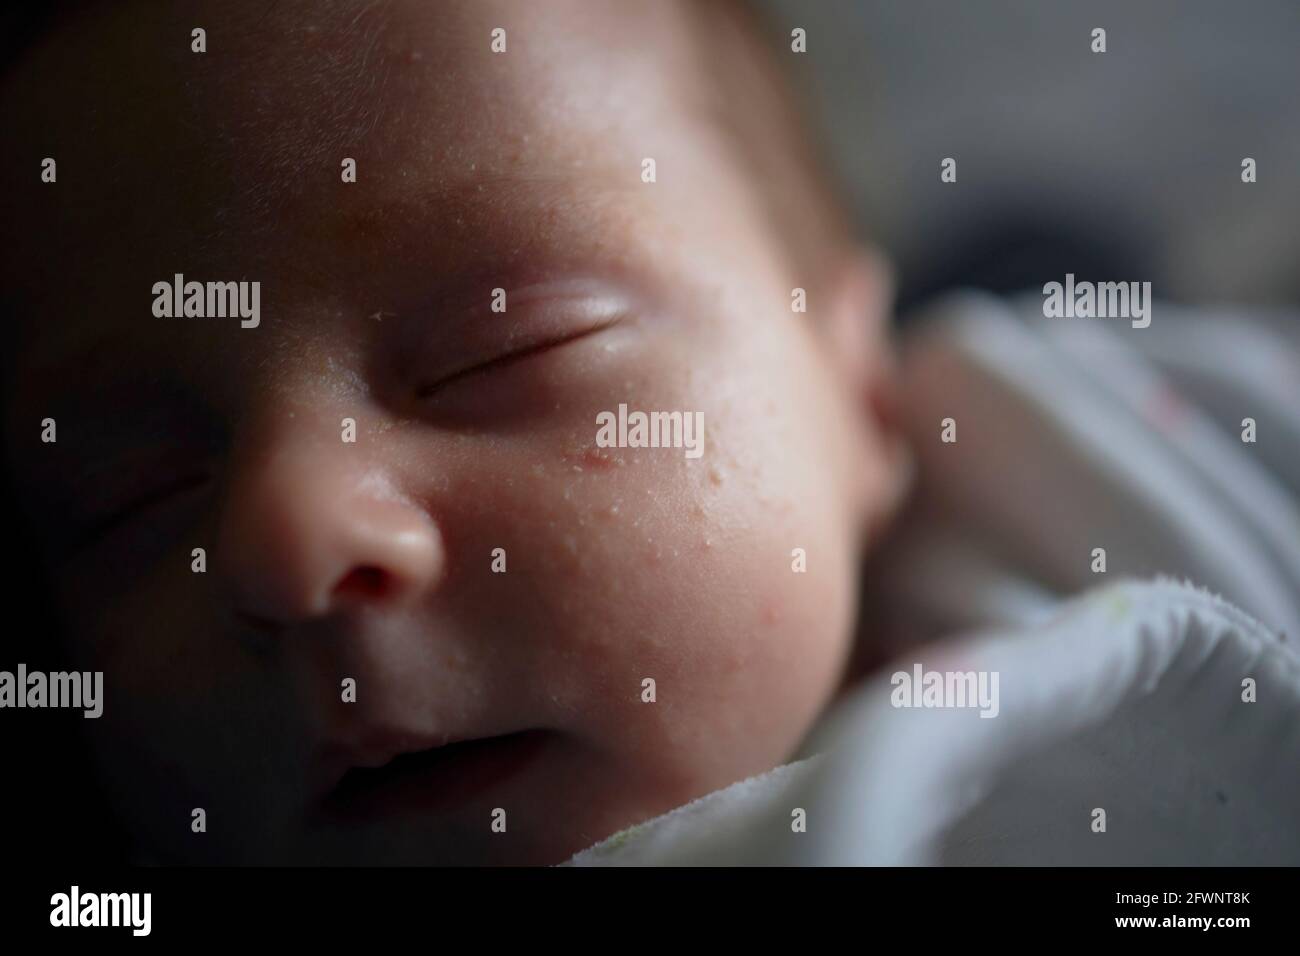 Baby with neonatal acne sleeping peacefully Stock Photo